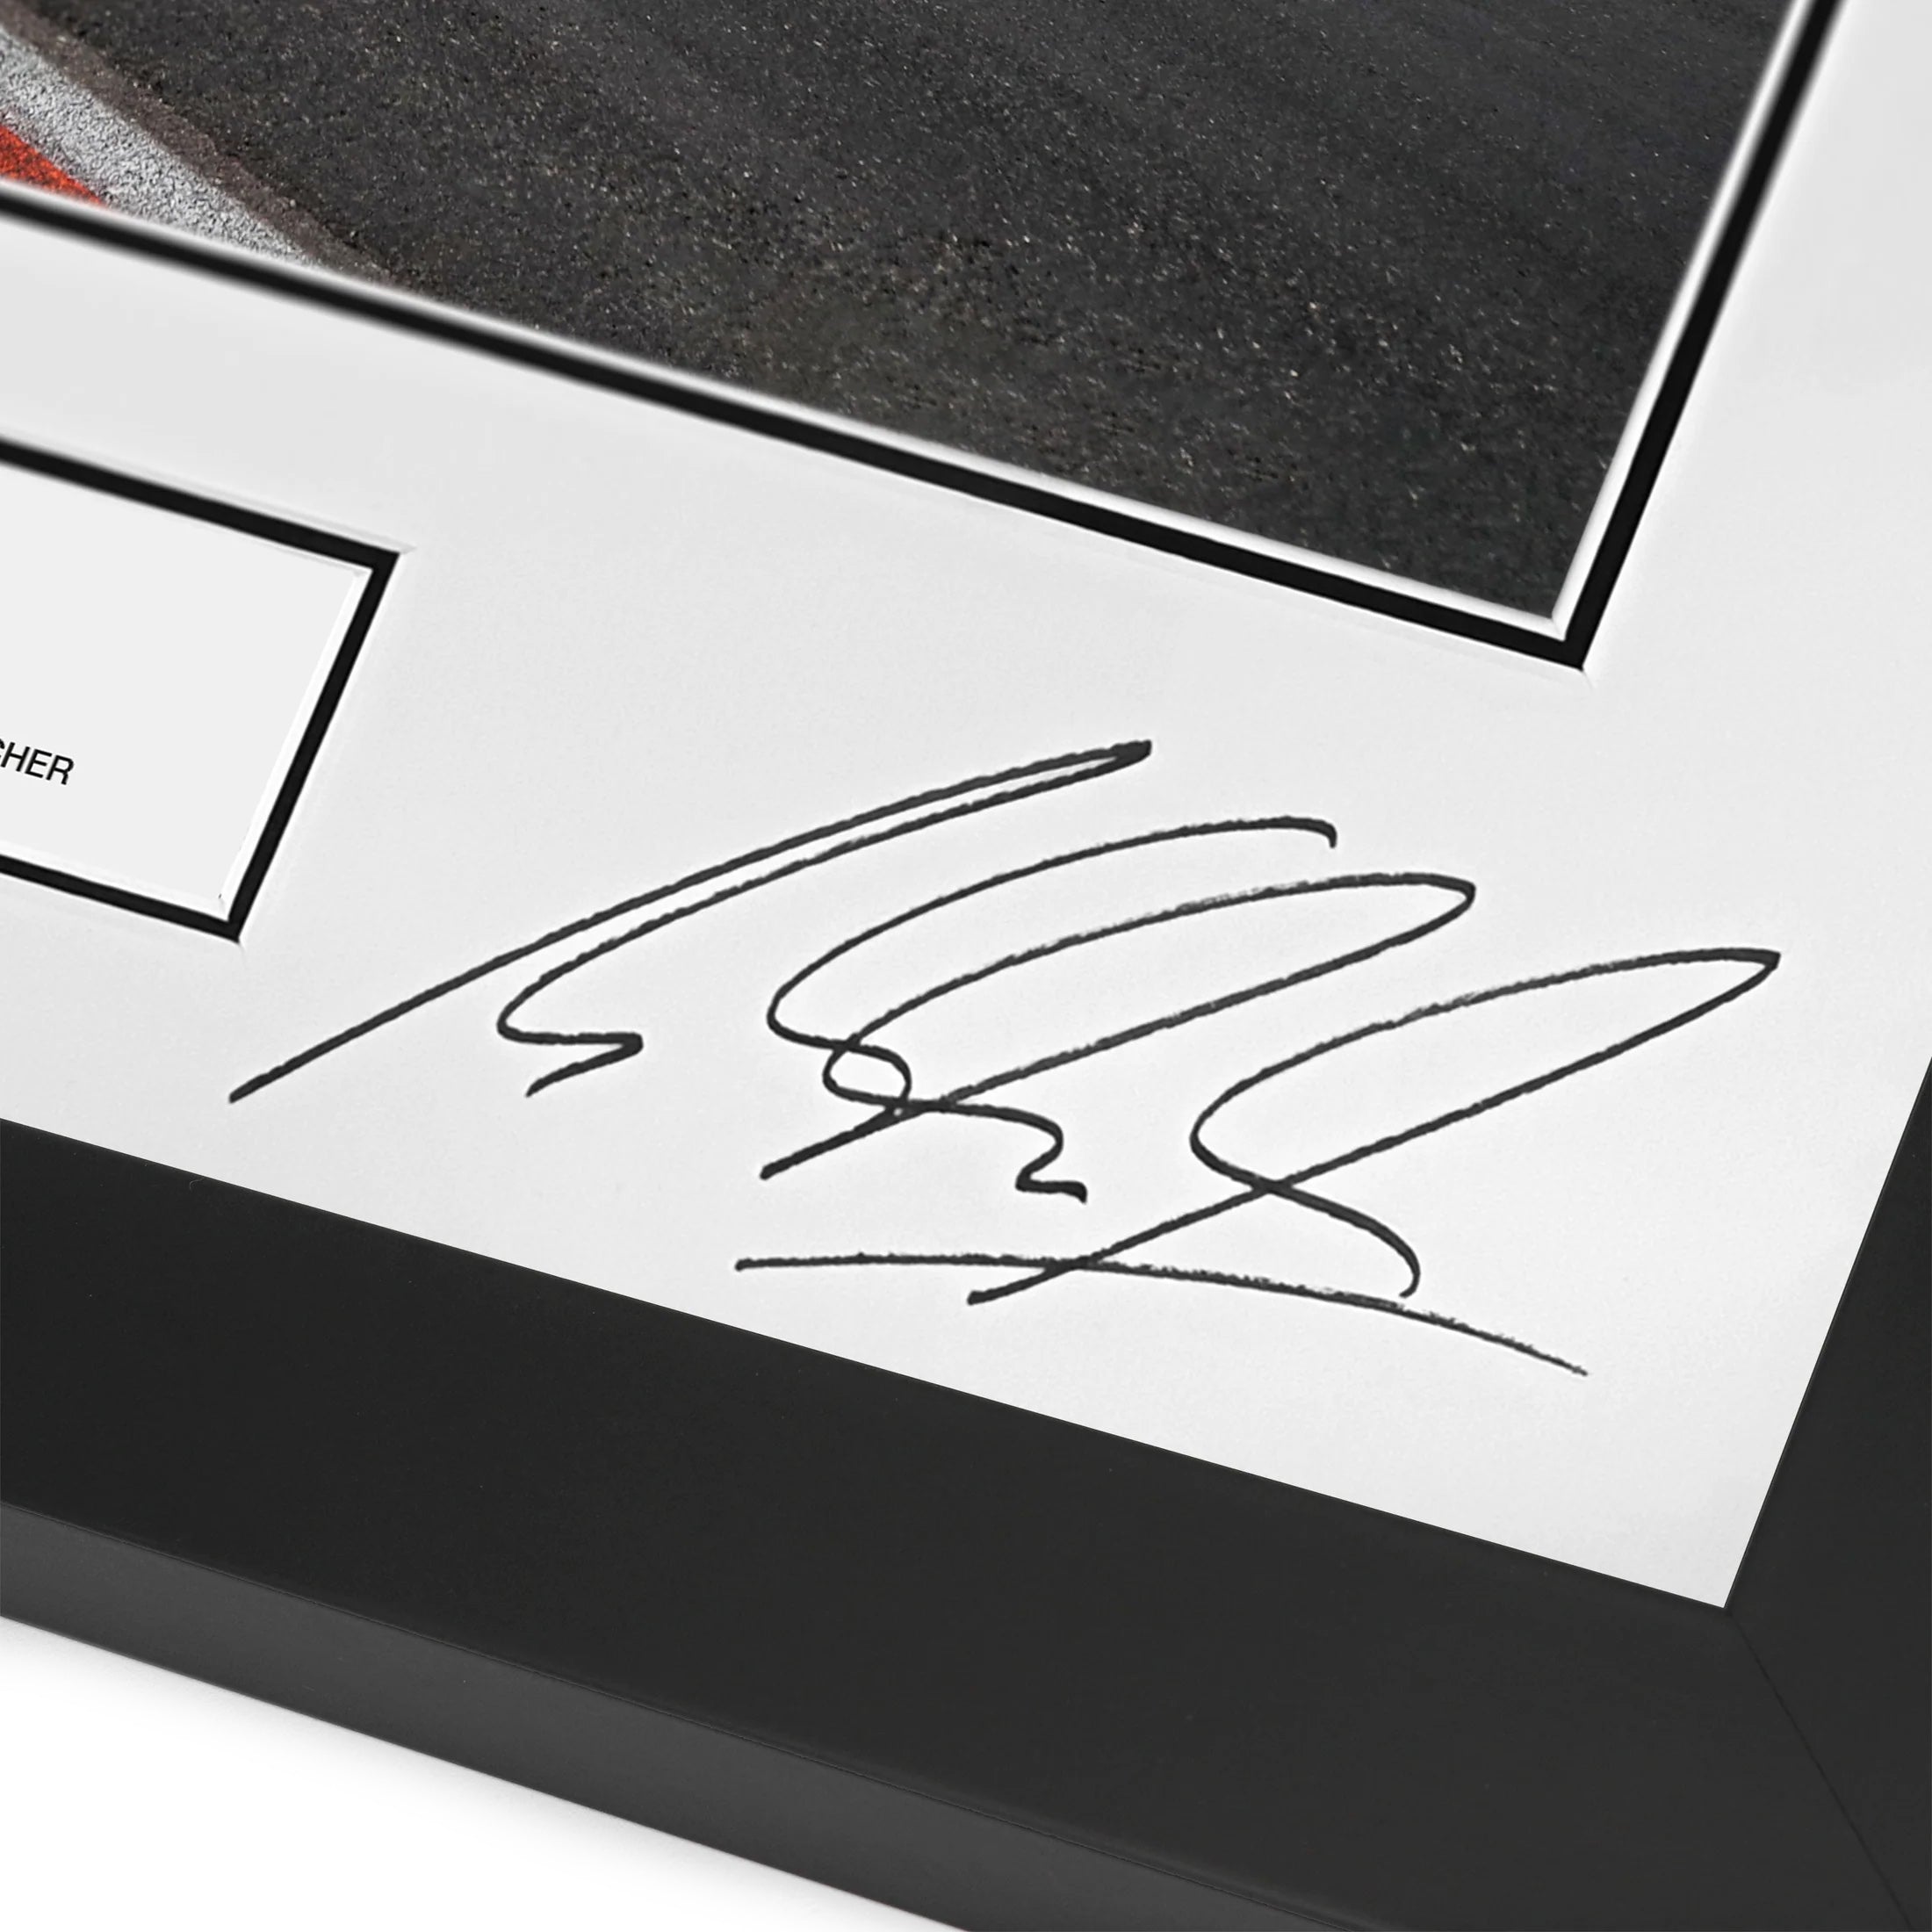 Kevin Magnussen & Mick Schumacher 2022 Dual Signed Print - Miami GP